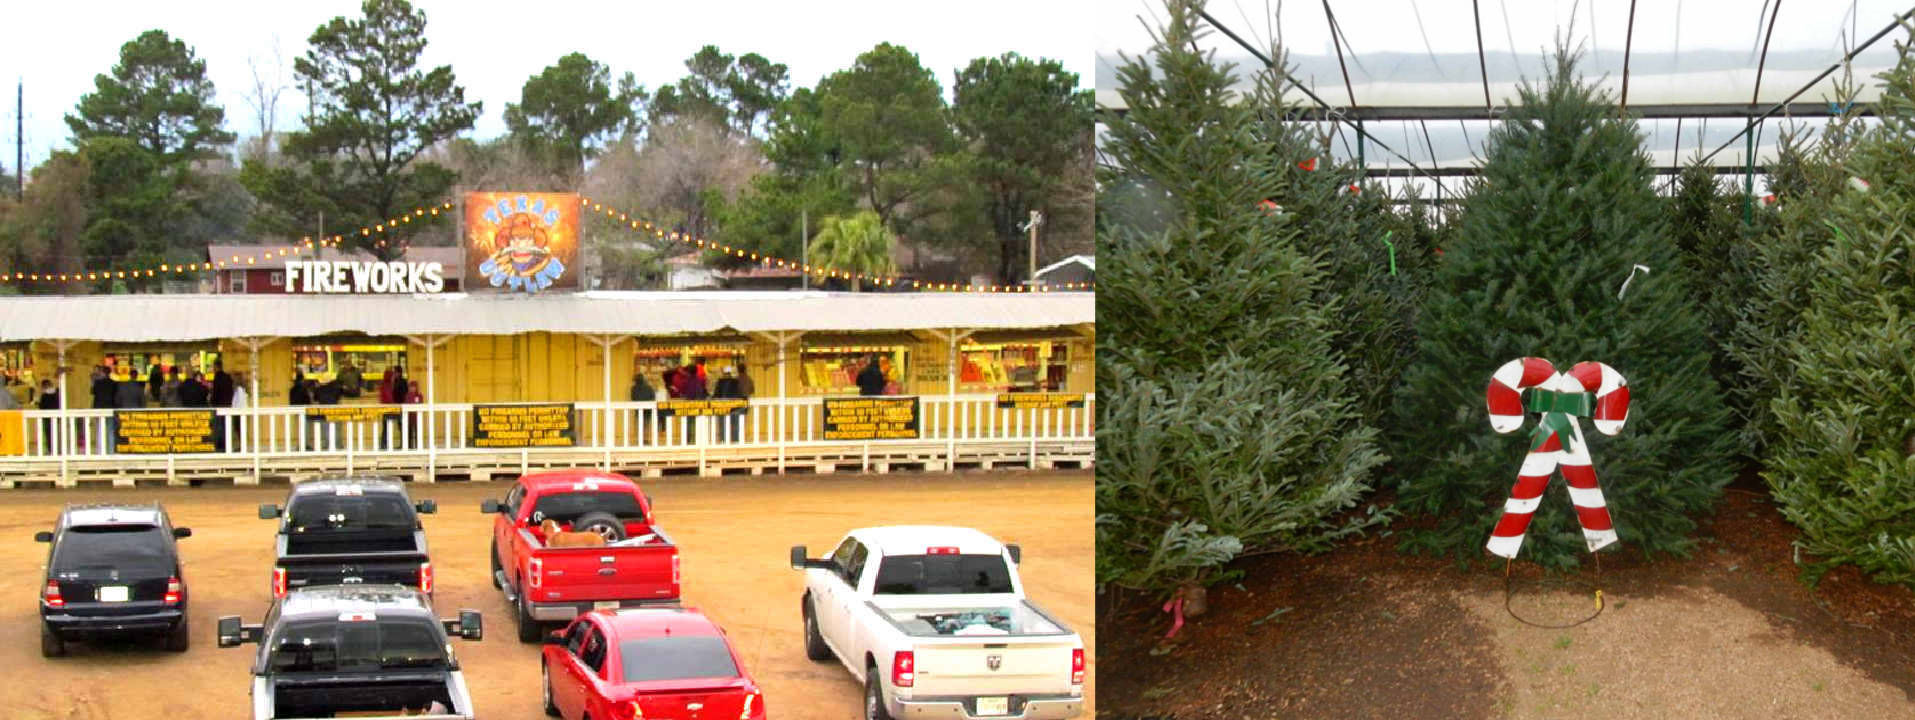 Seasonal Items like Christmas Trees, Fireworks, Grass at Madison Gardens Nursery, Spring, TX.